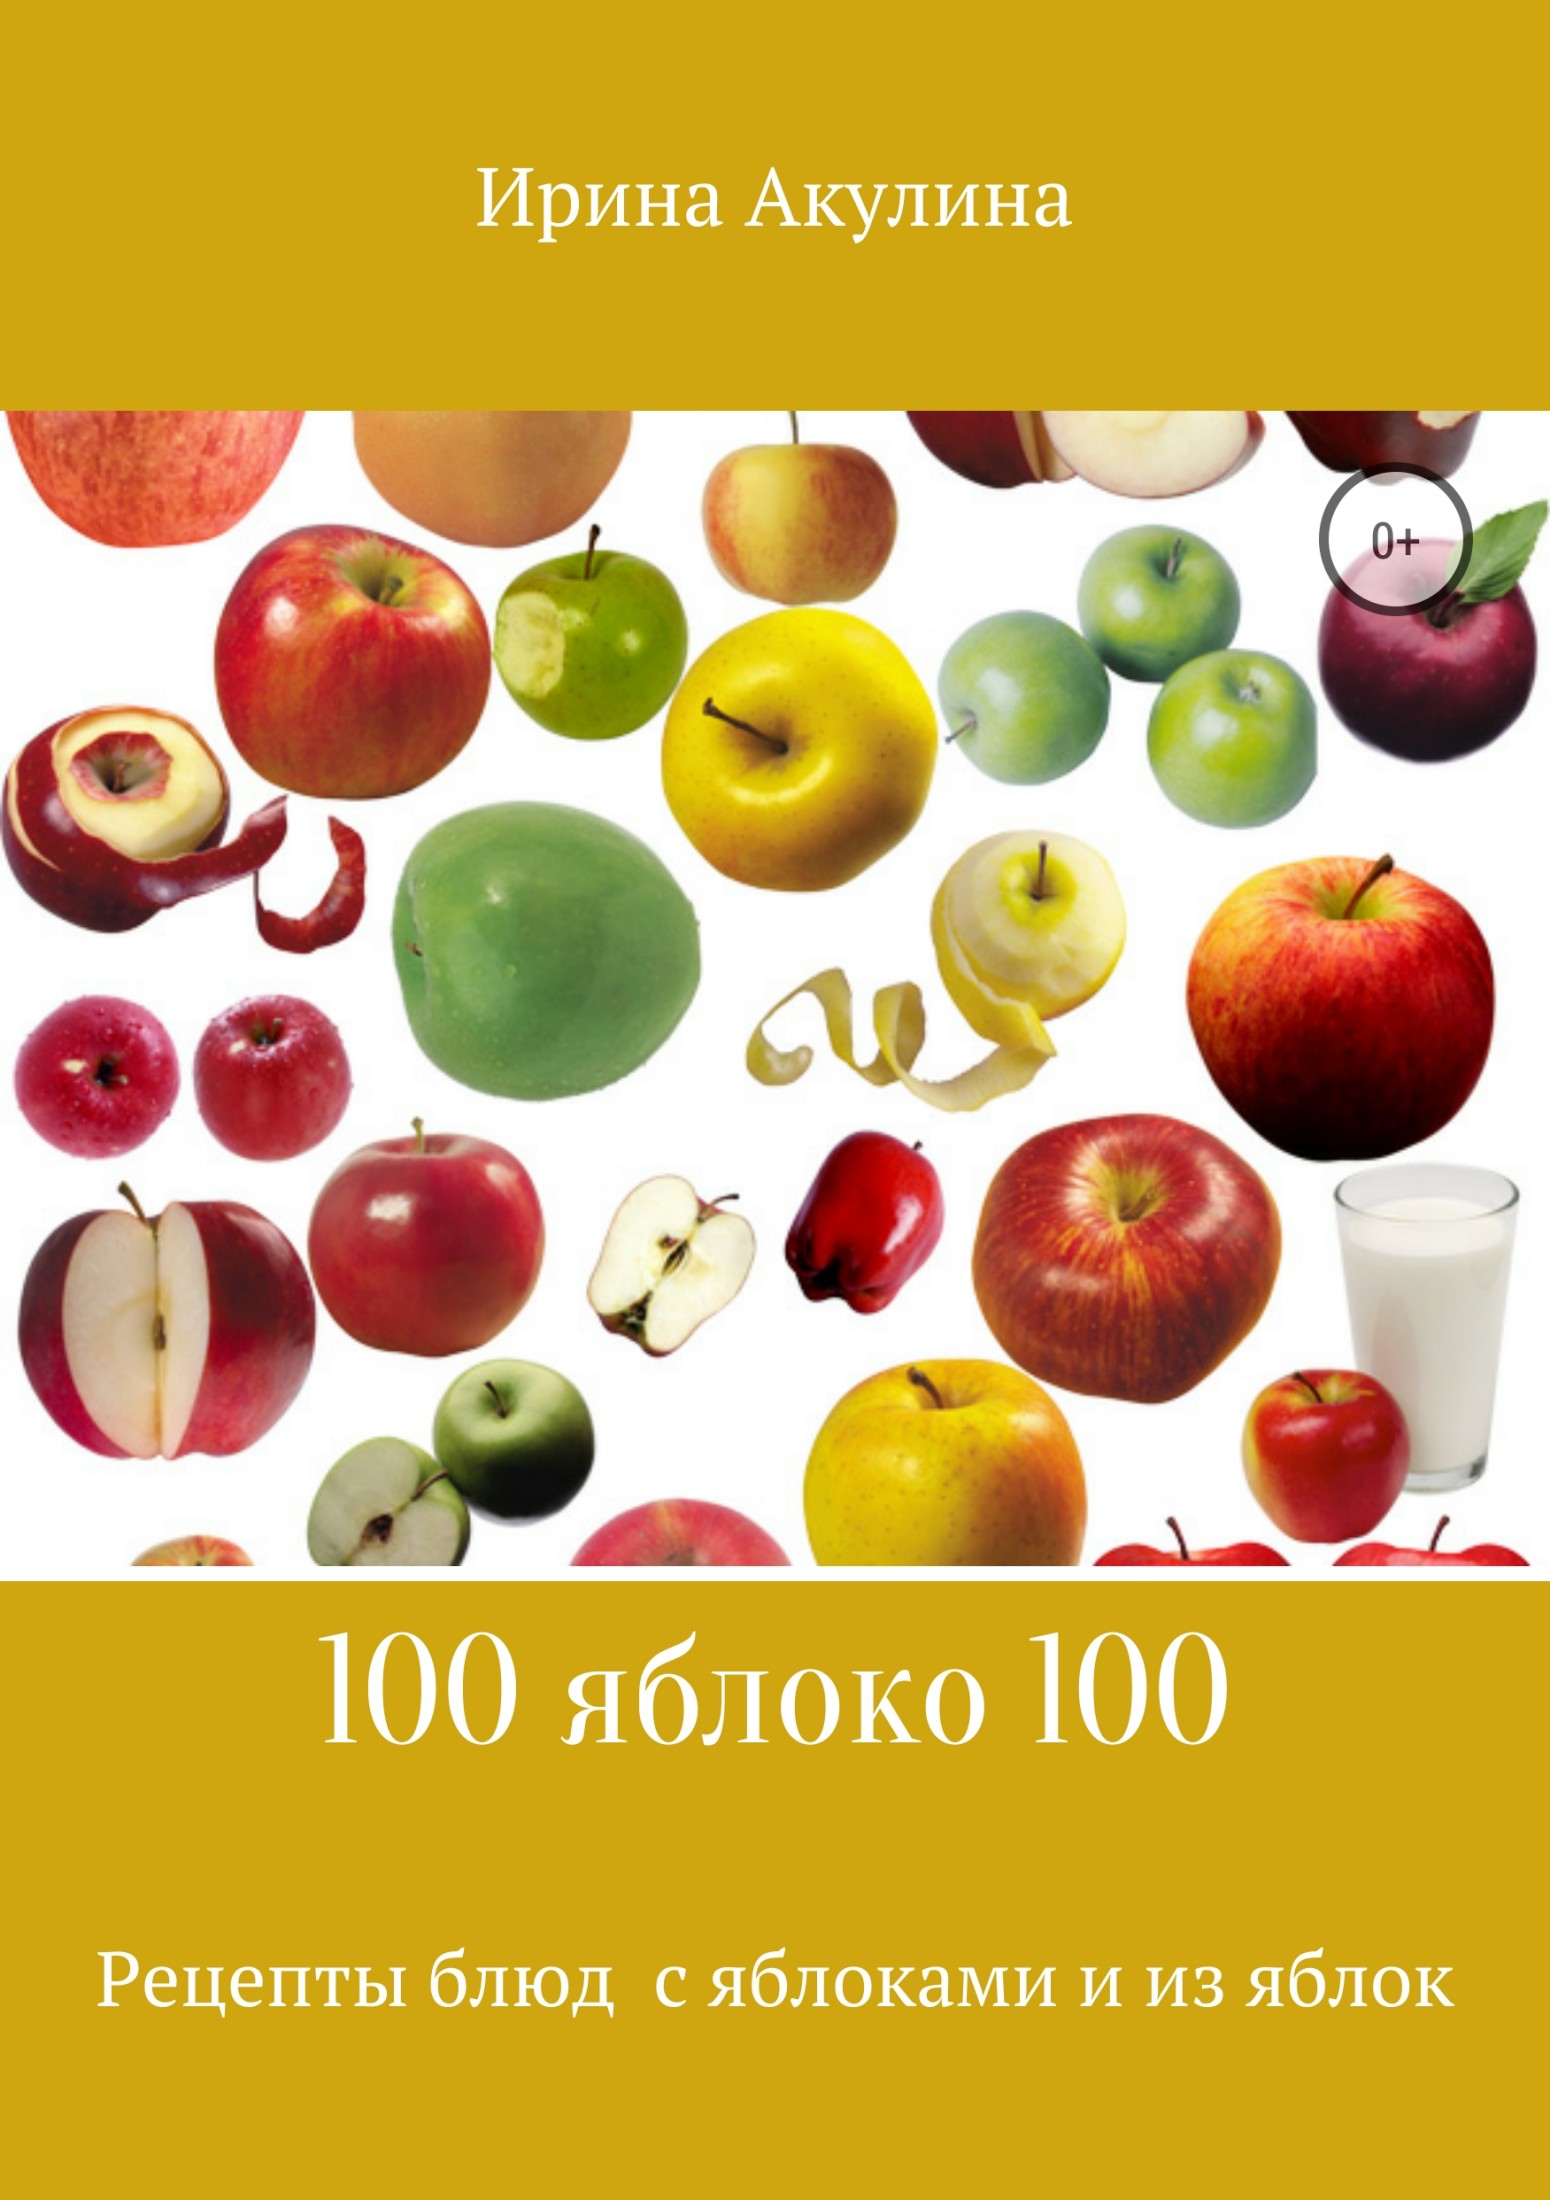 100 яблоко 100. Рецепты блюд с яблоками и из яблок - Ирина Александровна Акулина